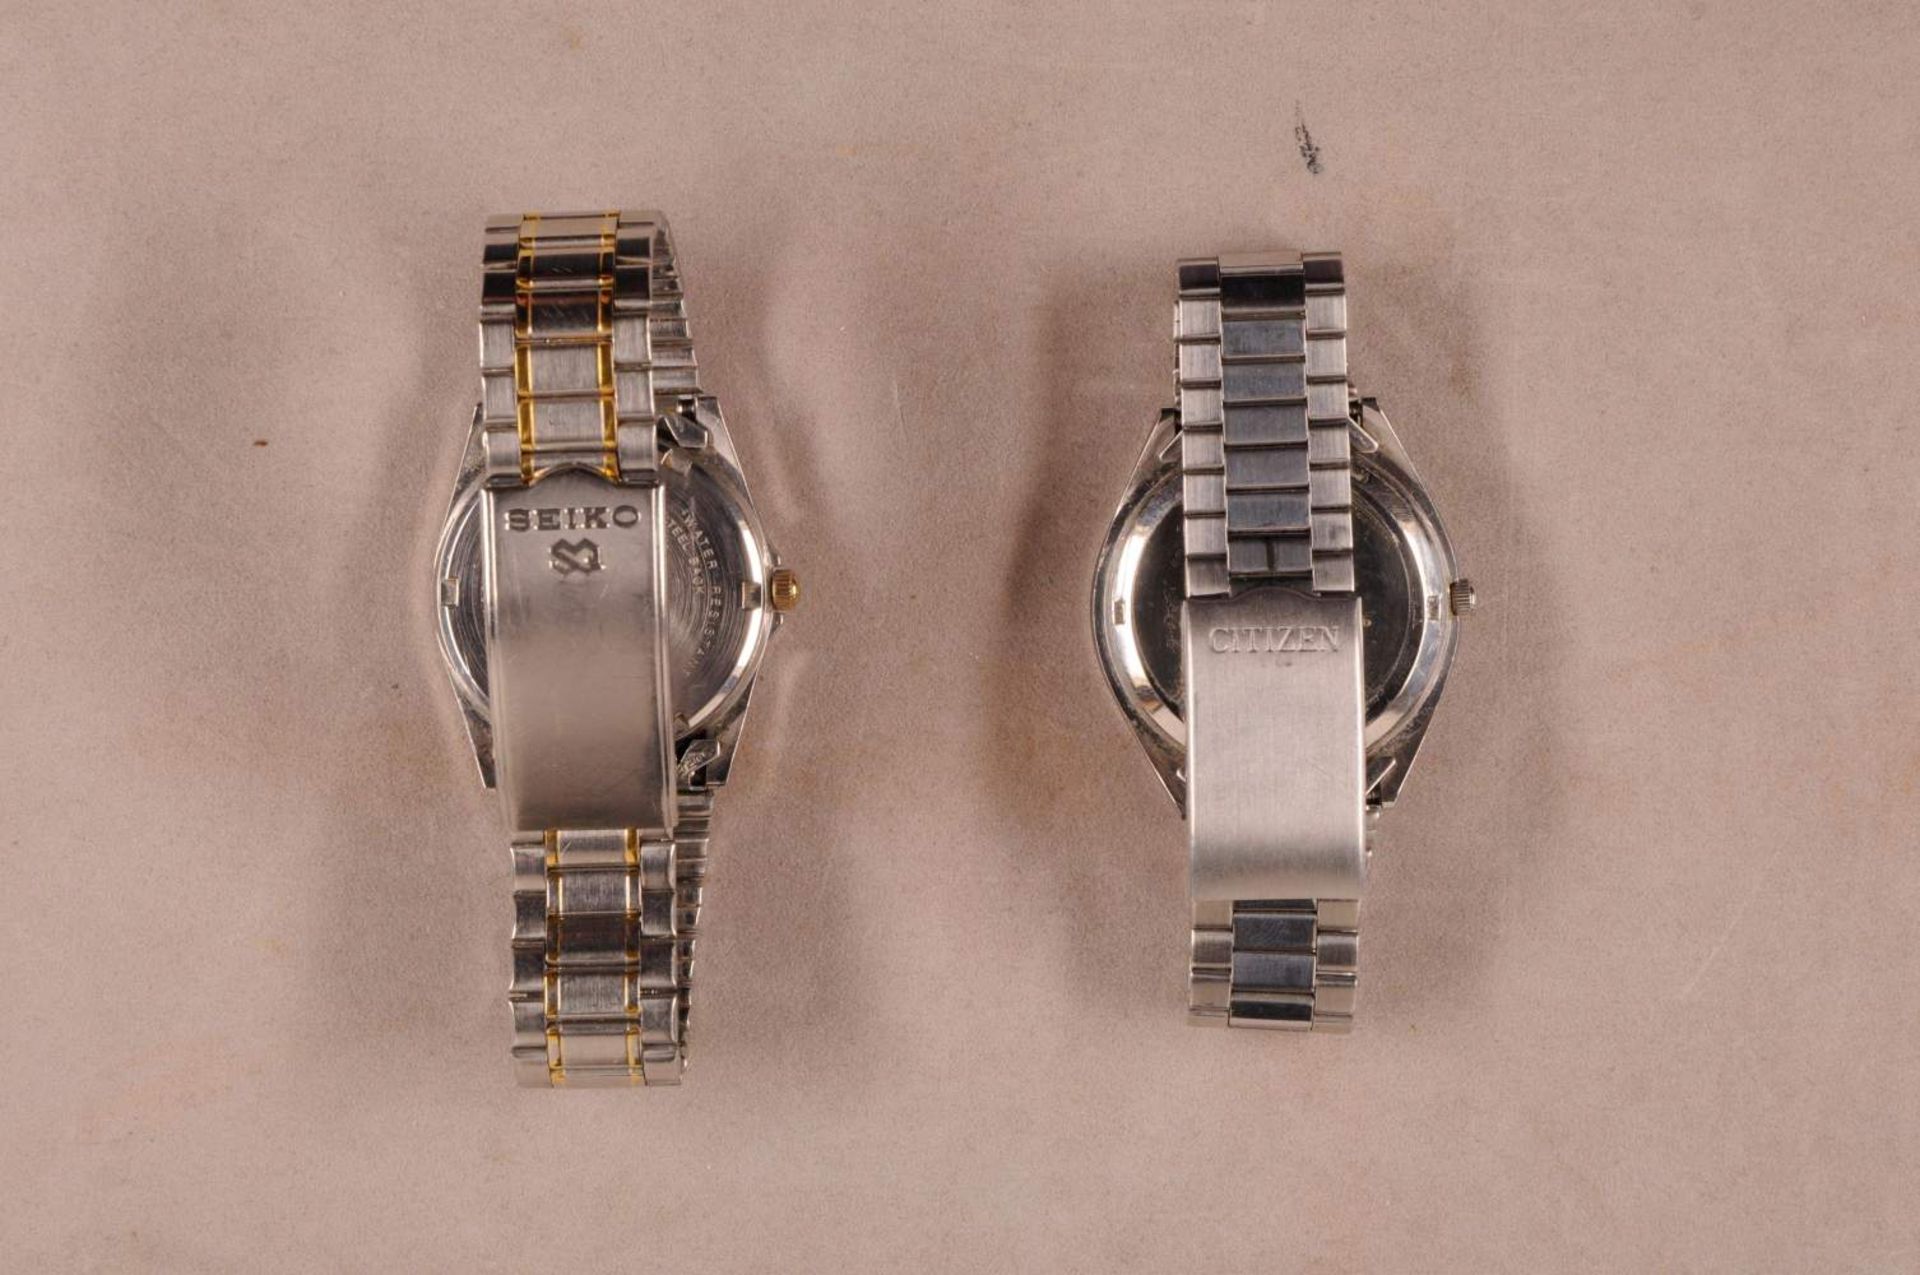 Lot 7 Armbanduhren Edelstahl/Metall/Kunststoff, tlw. vergoldet, bestehend aus: Seiko, Citizen, - Image 9 of 10